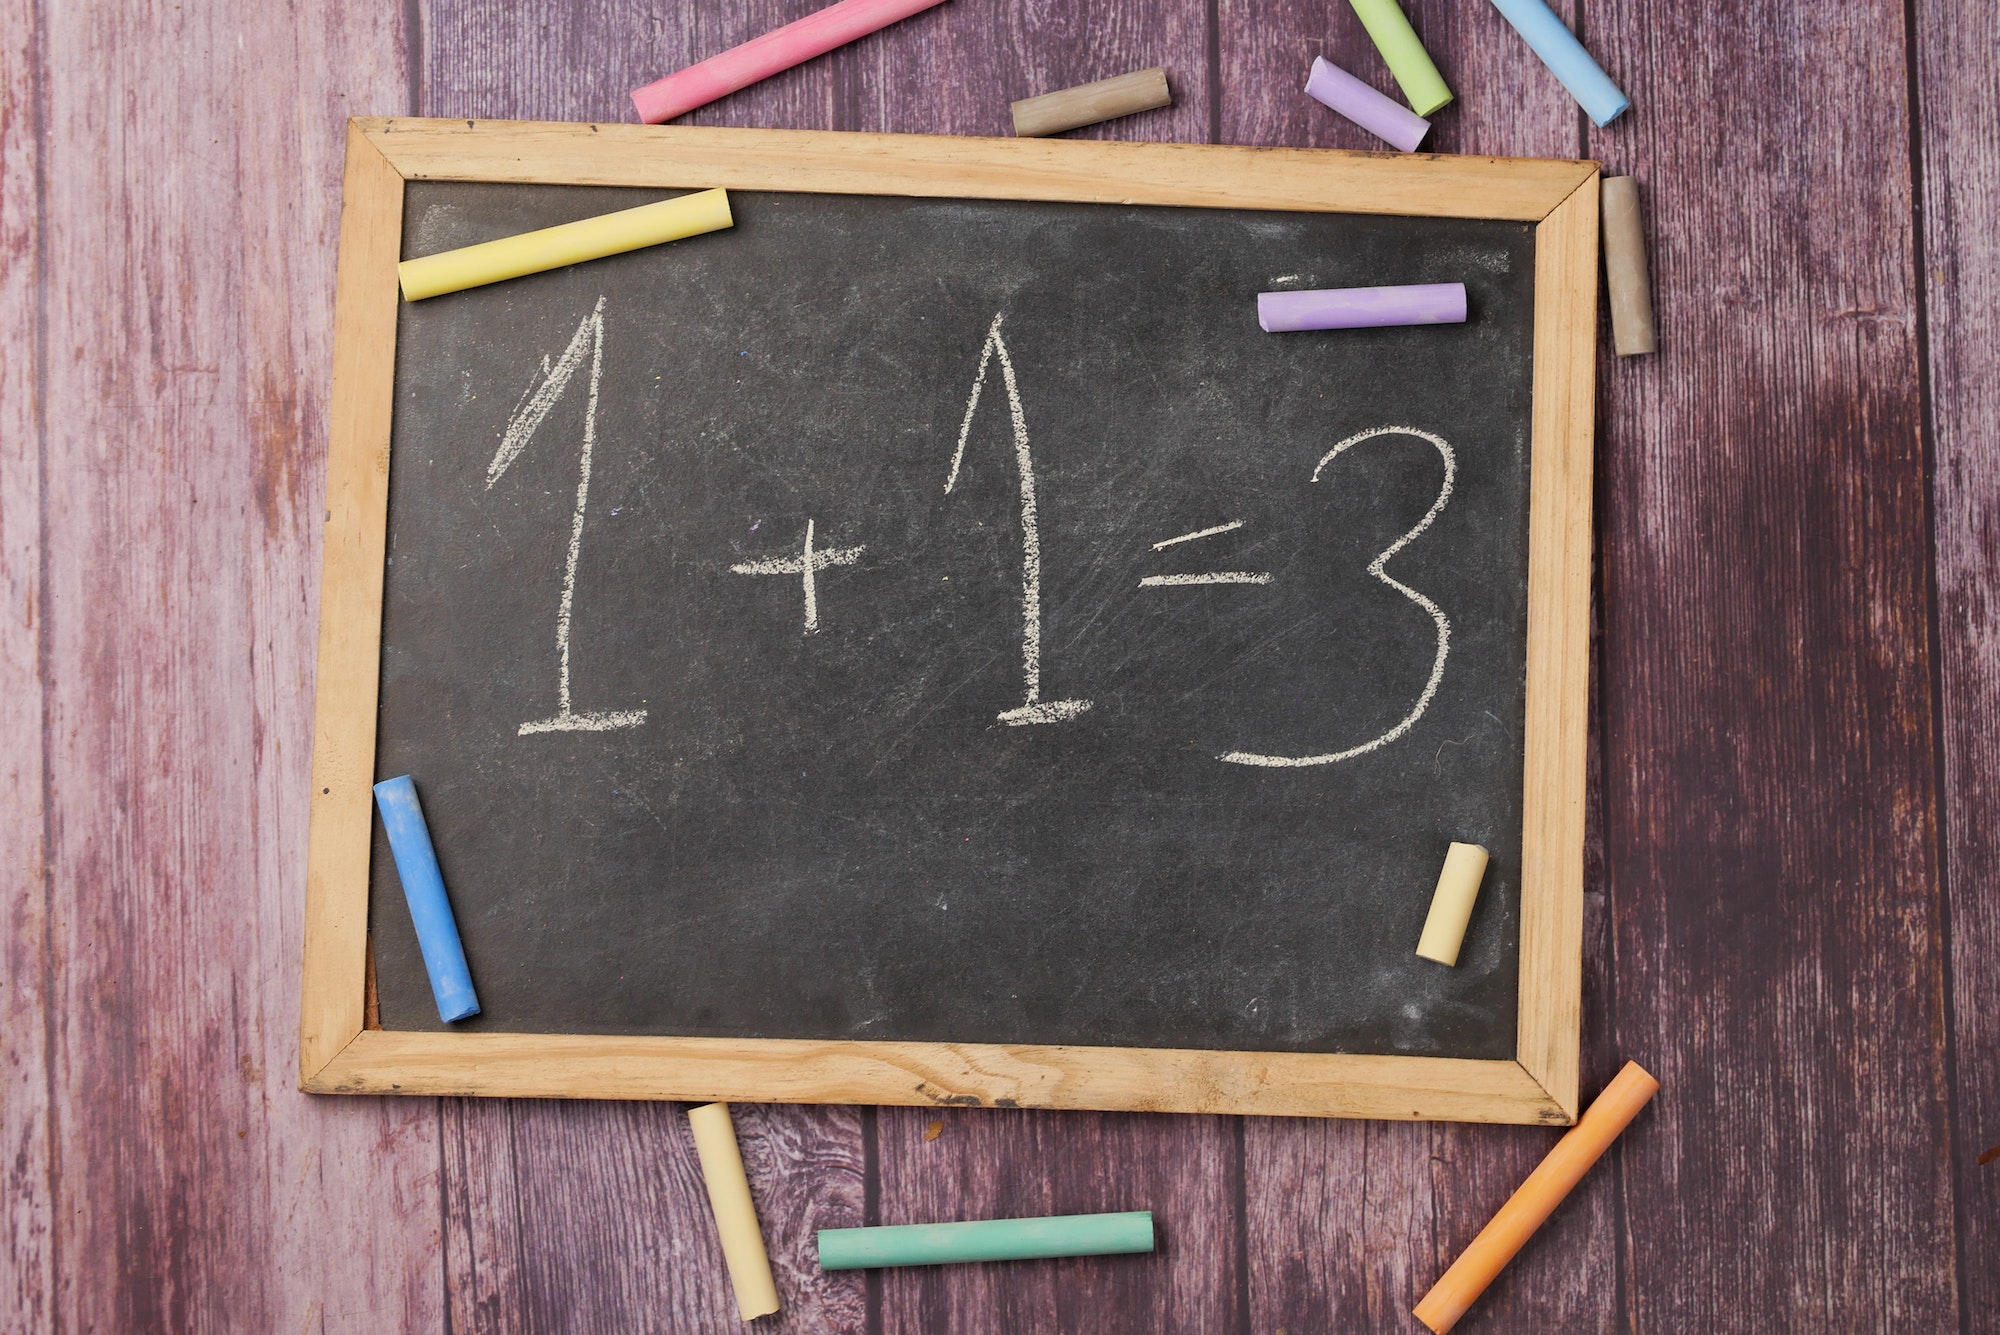 Mistake in math formula on chalkboard, education concept